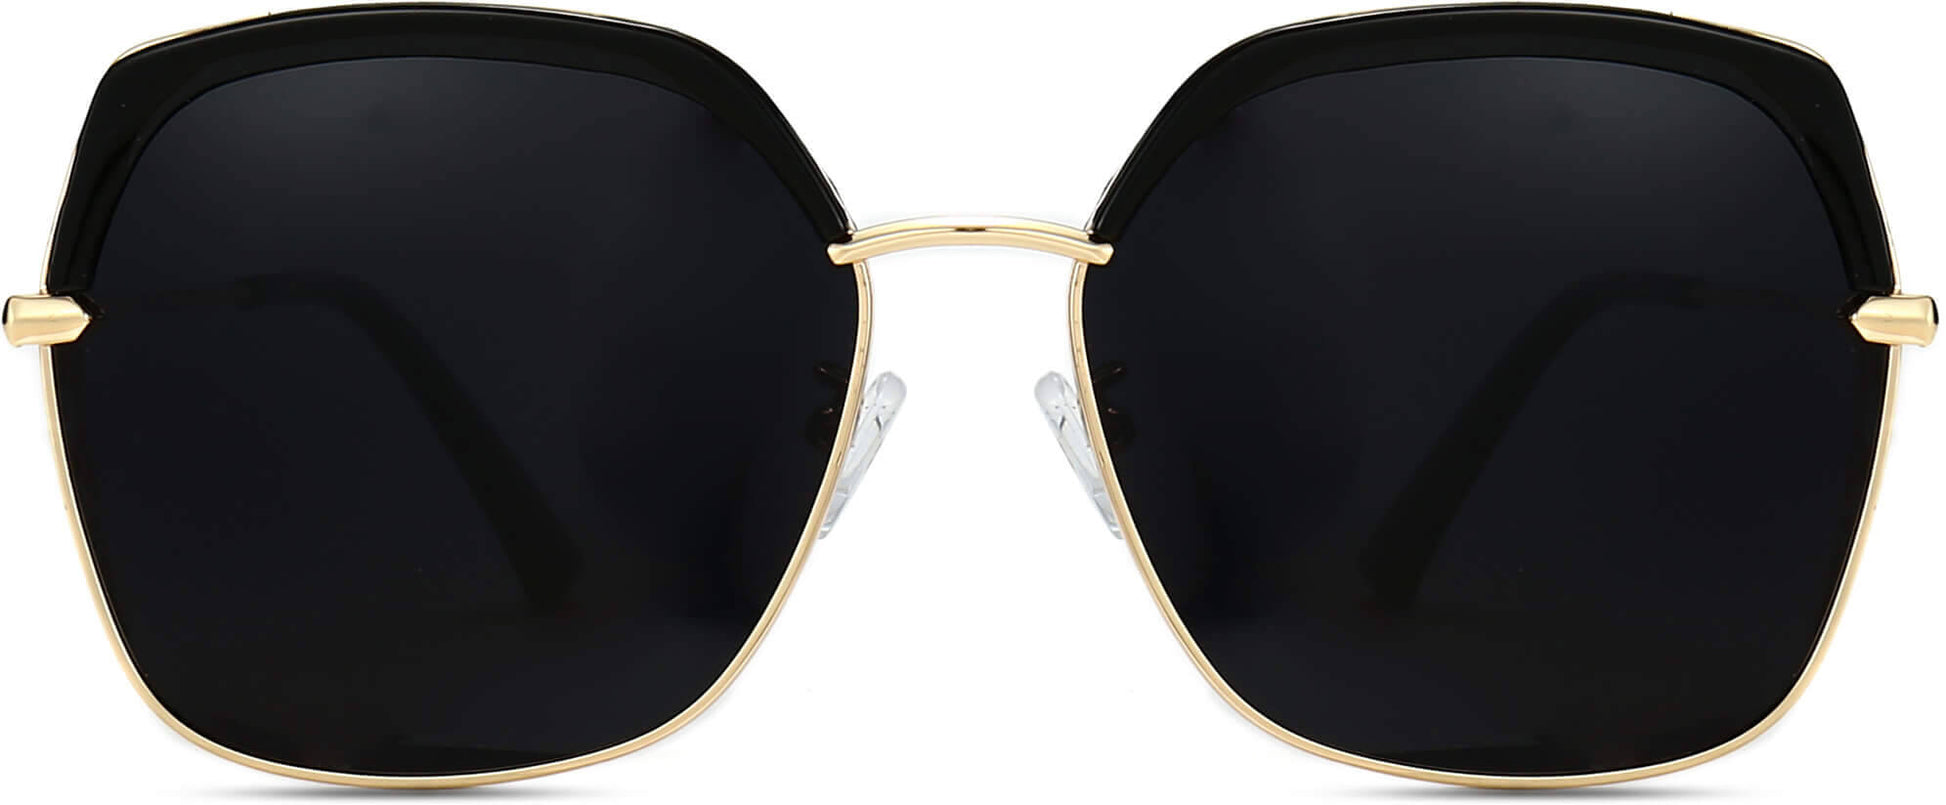 Naomi Black Plastic Sunglasses from ANRRI, front view